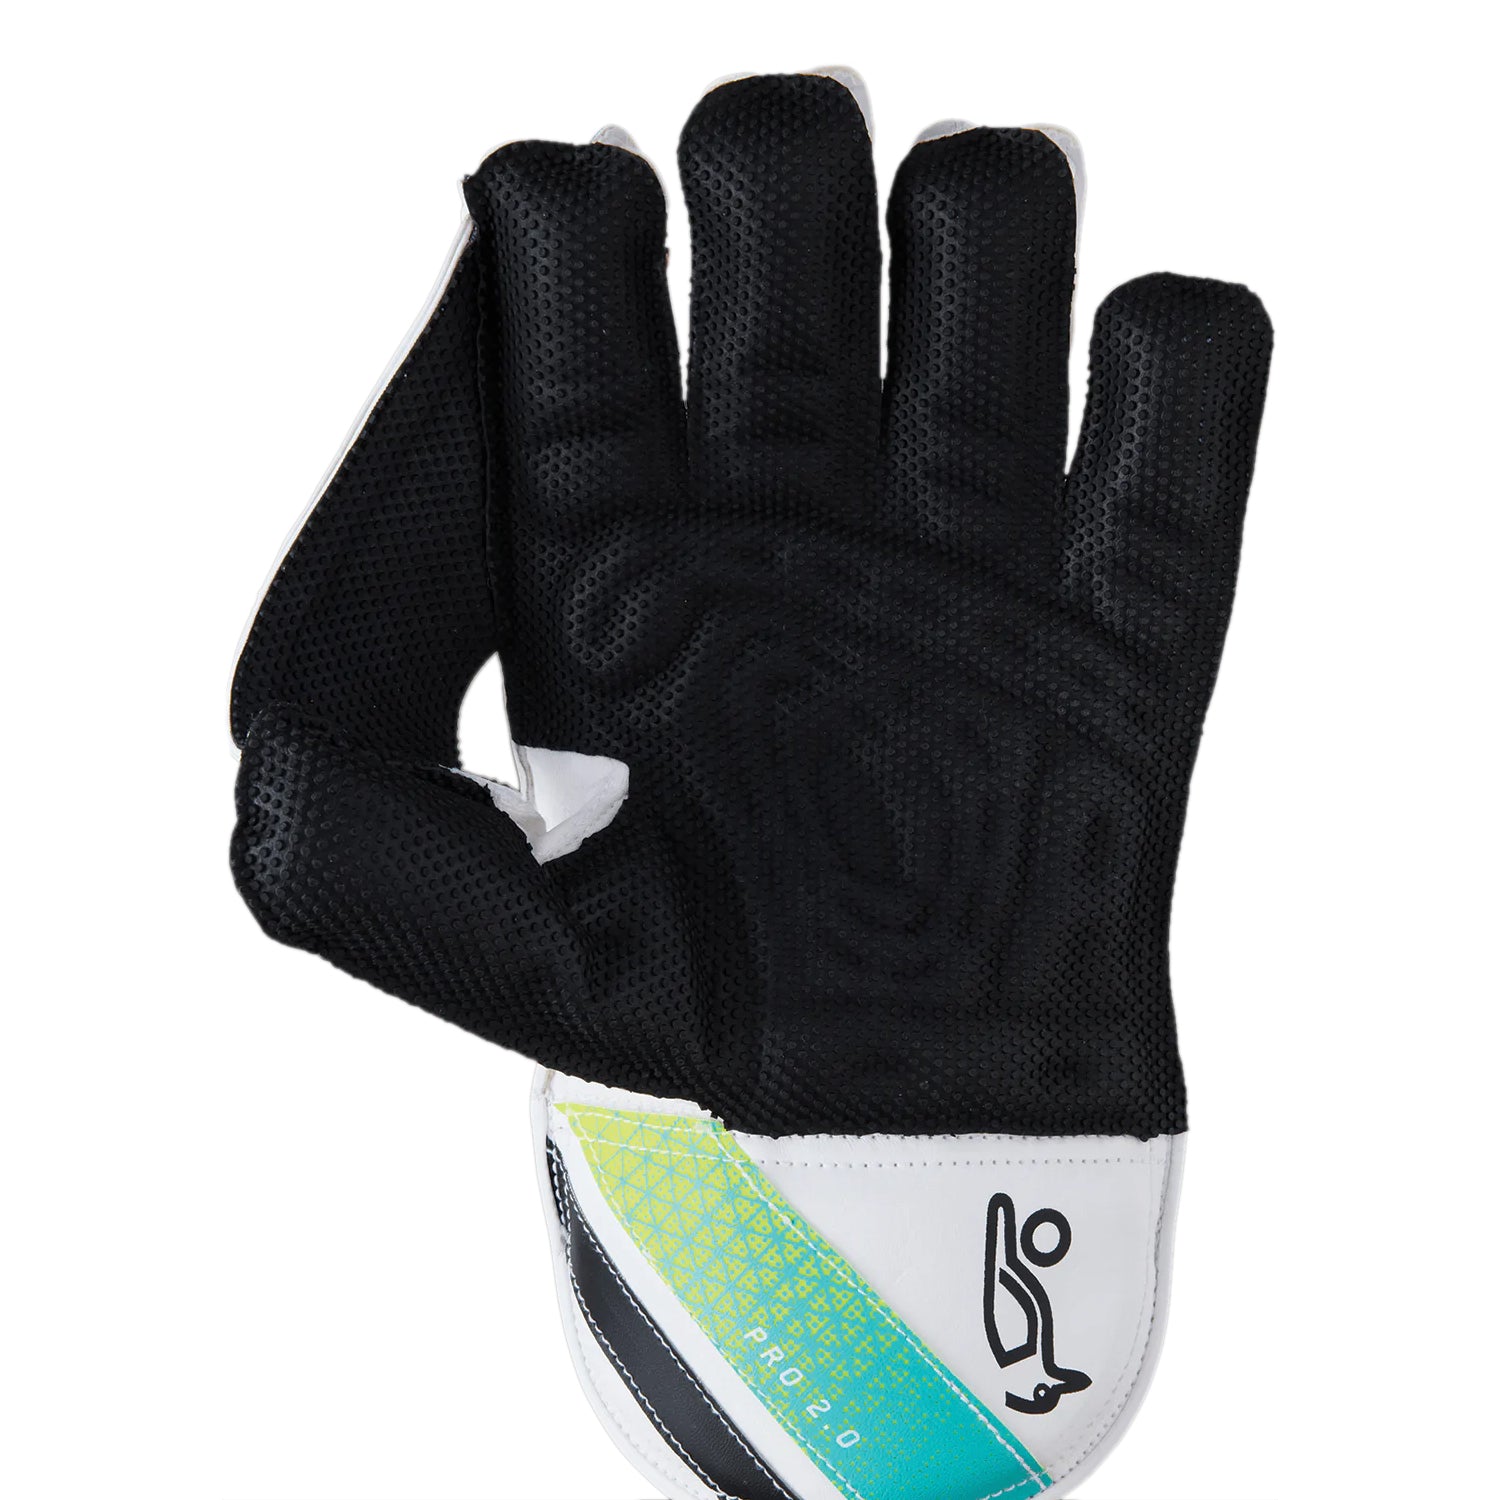 Kookaburra Rapid Pro 2.0 Wicket keeping Gloves - Best Price online Prokicksports.com